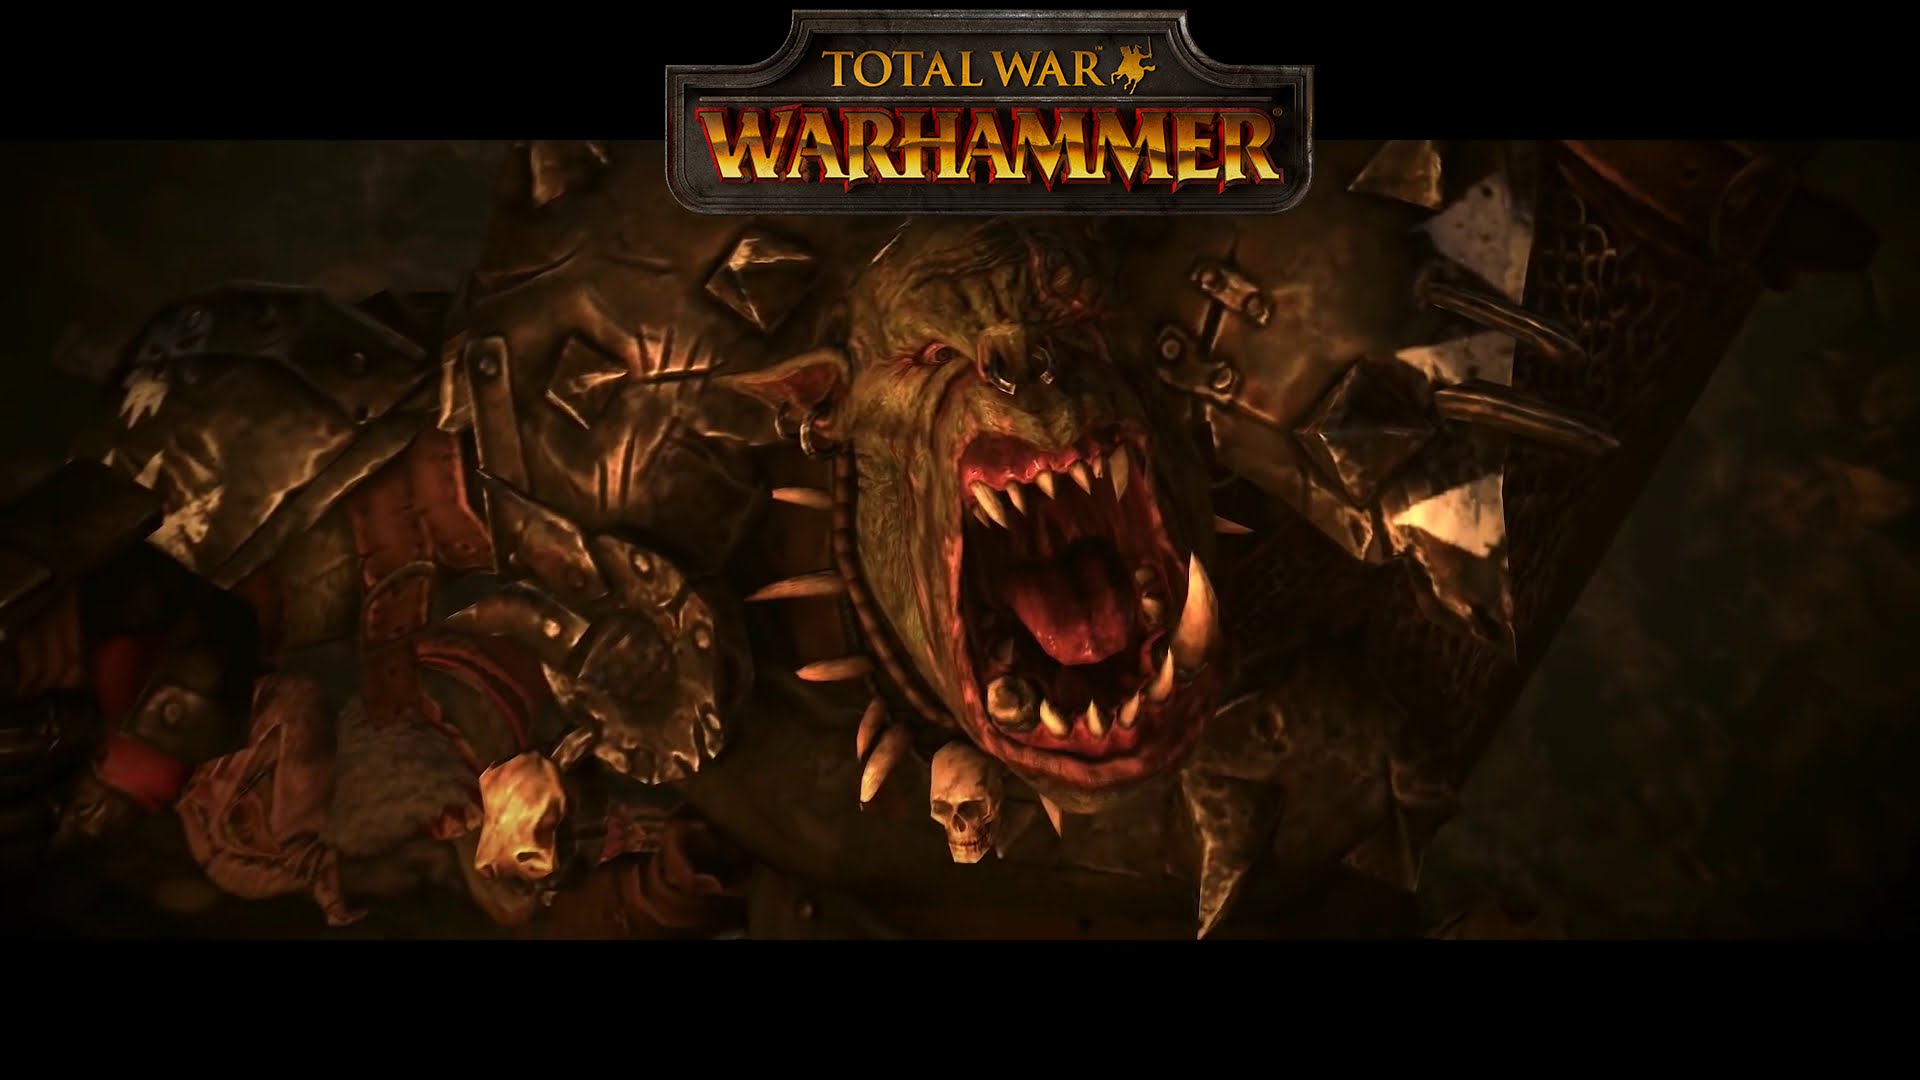 warhammer total war wallpaper,action adventure game,darkness,pc game,demon,fiction